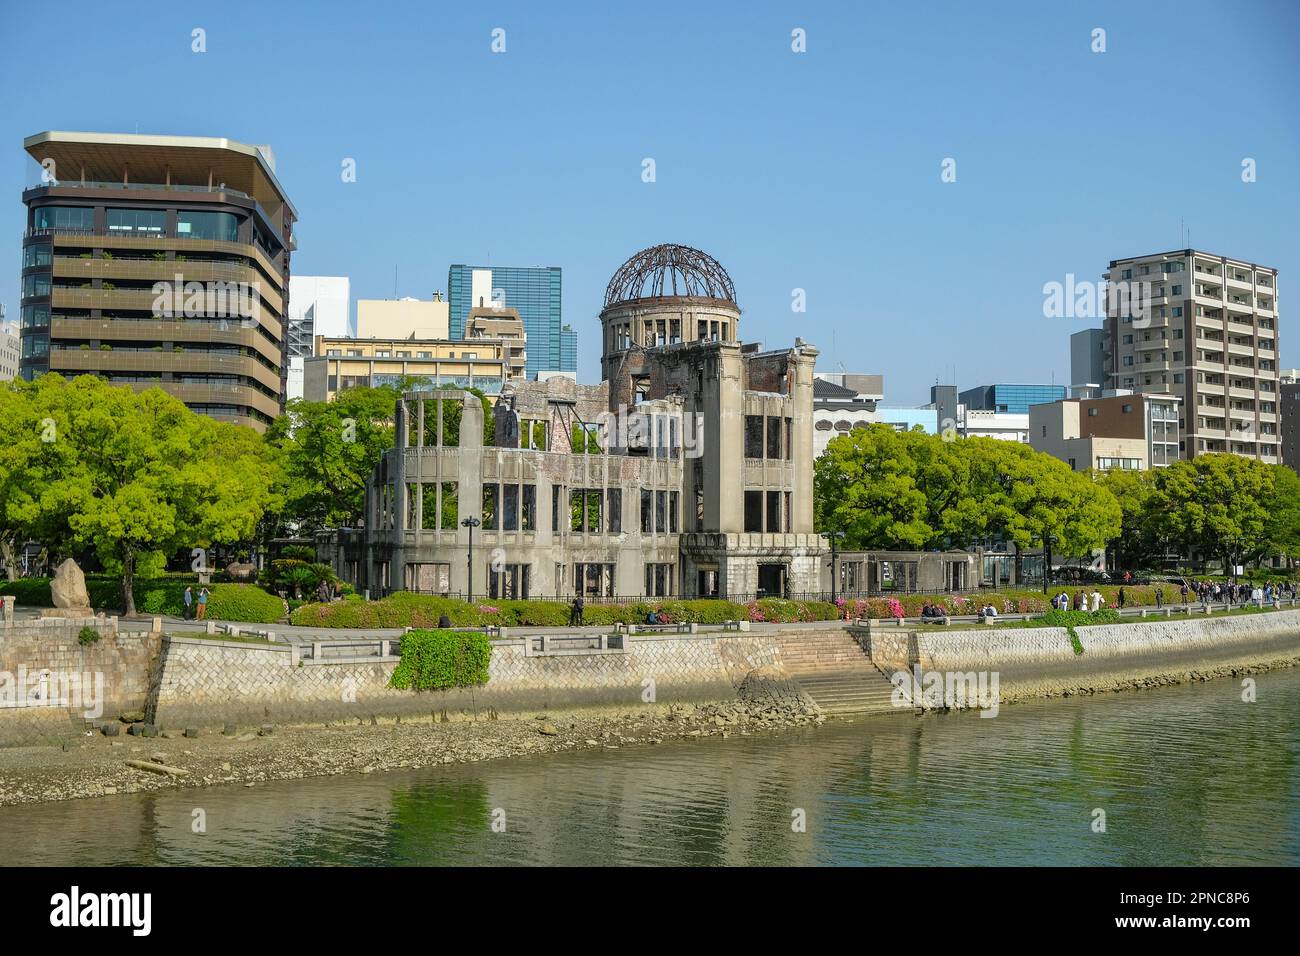 Hiroshima, Japan - 17. April 2023: Das Hiroshima Peace Memorial, heute bekannt als Atombombendom in Hiroshima, Japan. Stockfoto